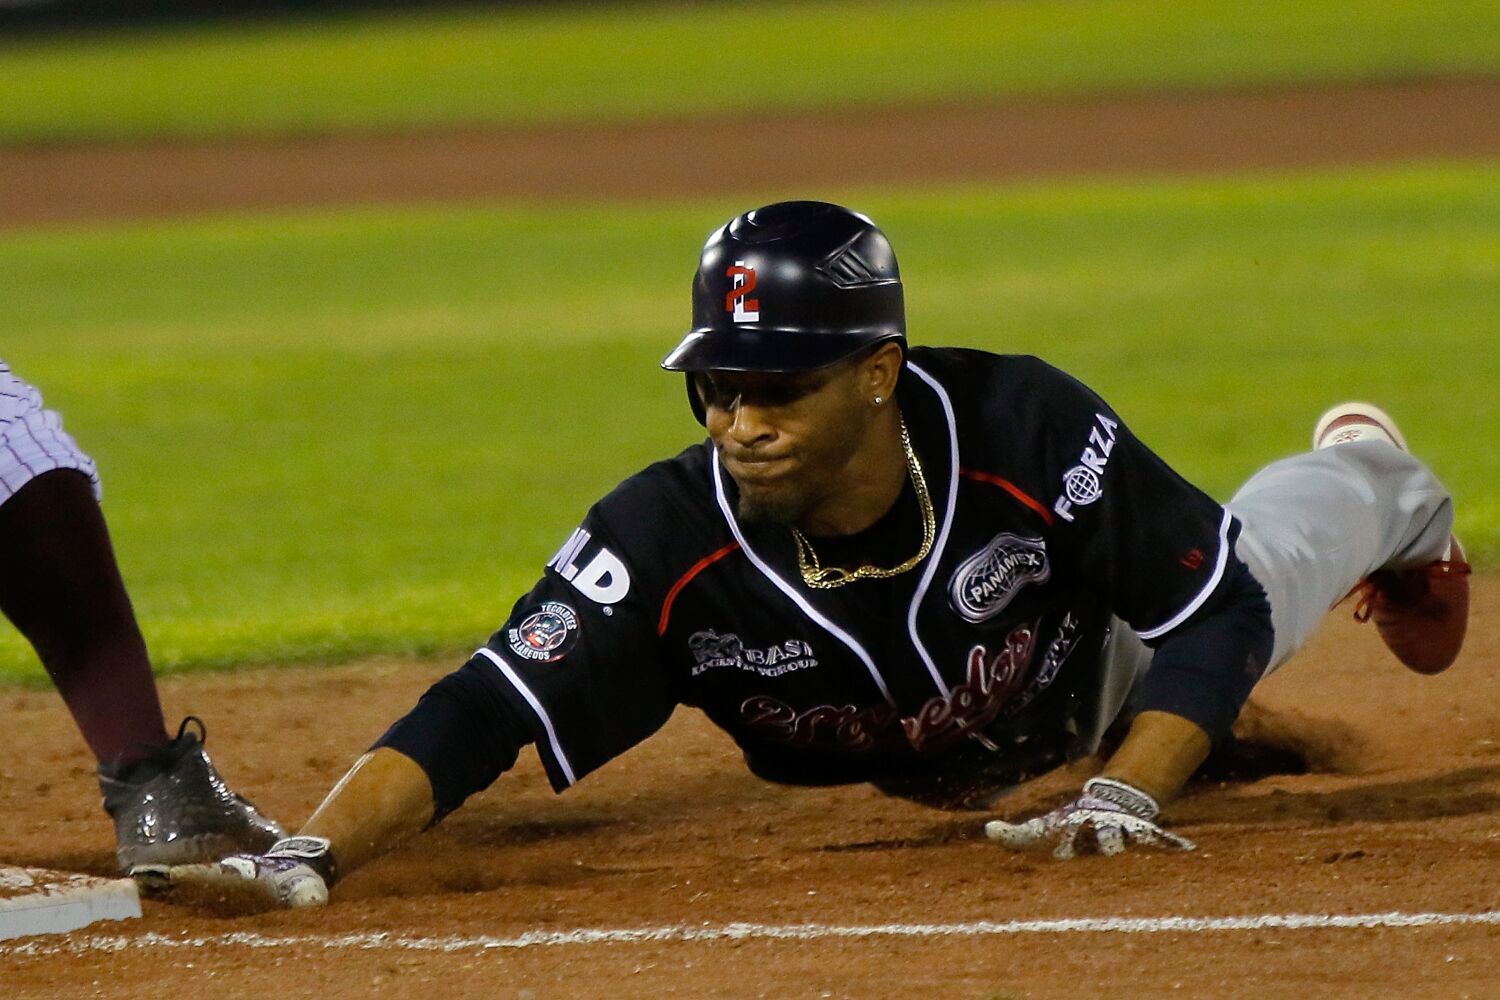 Tecolotes de los Dos Laredos thrive hosting baseball games in the U.S. and Mexico